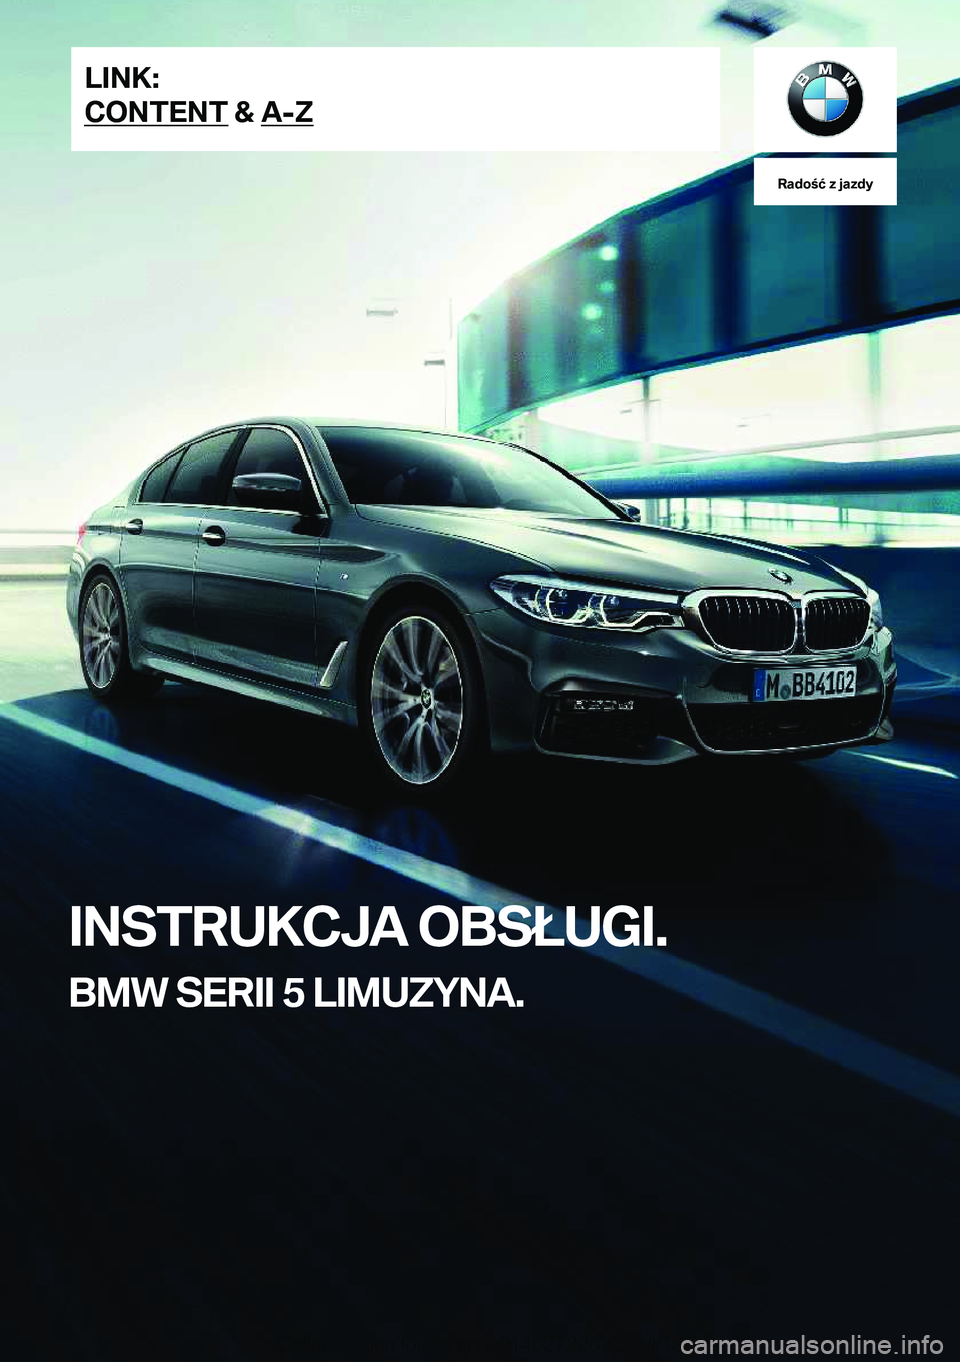 BMW 5 SERIES 2019  Instrukcja obsługi (in Polish) �R�a�d�o�ć��z��j�a�z�d�y
�I�N�S�T�R�U�K�C�J�A��O�B�S�Ł�U�G�I�.
�B�M�W��S�E�R�I�I��5��L�I�M�U�Z�Y�N�A�.�L�I�N�K�:
�C�O�N�T�E�N�T��&��A�-�Z�O�n�l�i�n�e��E�d�i�t�i�o�n��f�o�r��P�a�r�t��n�